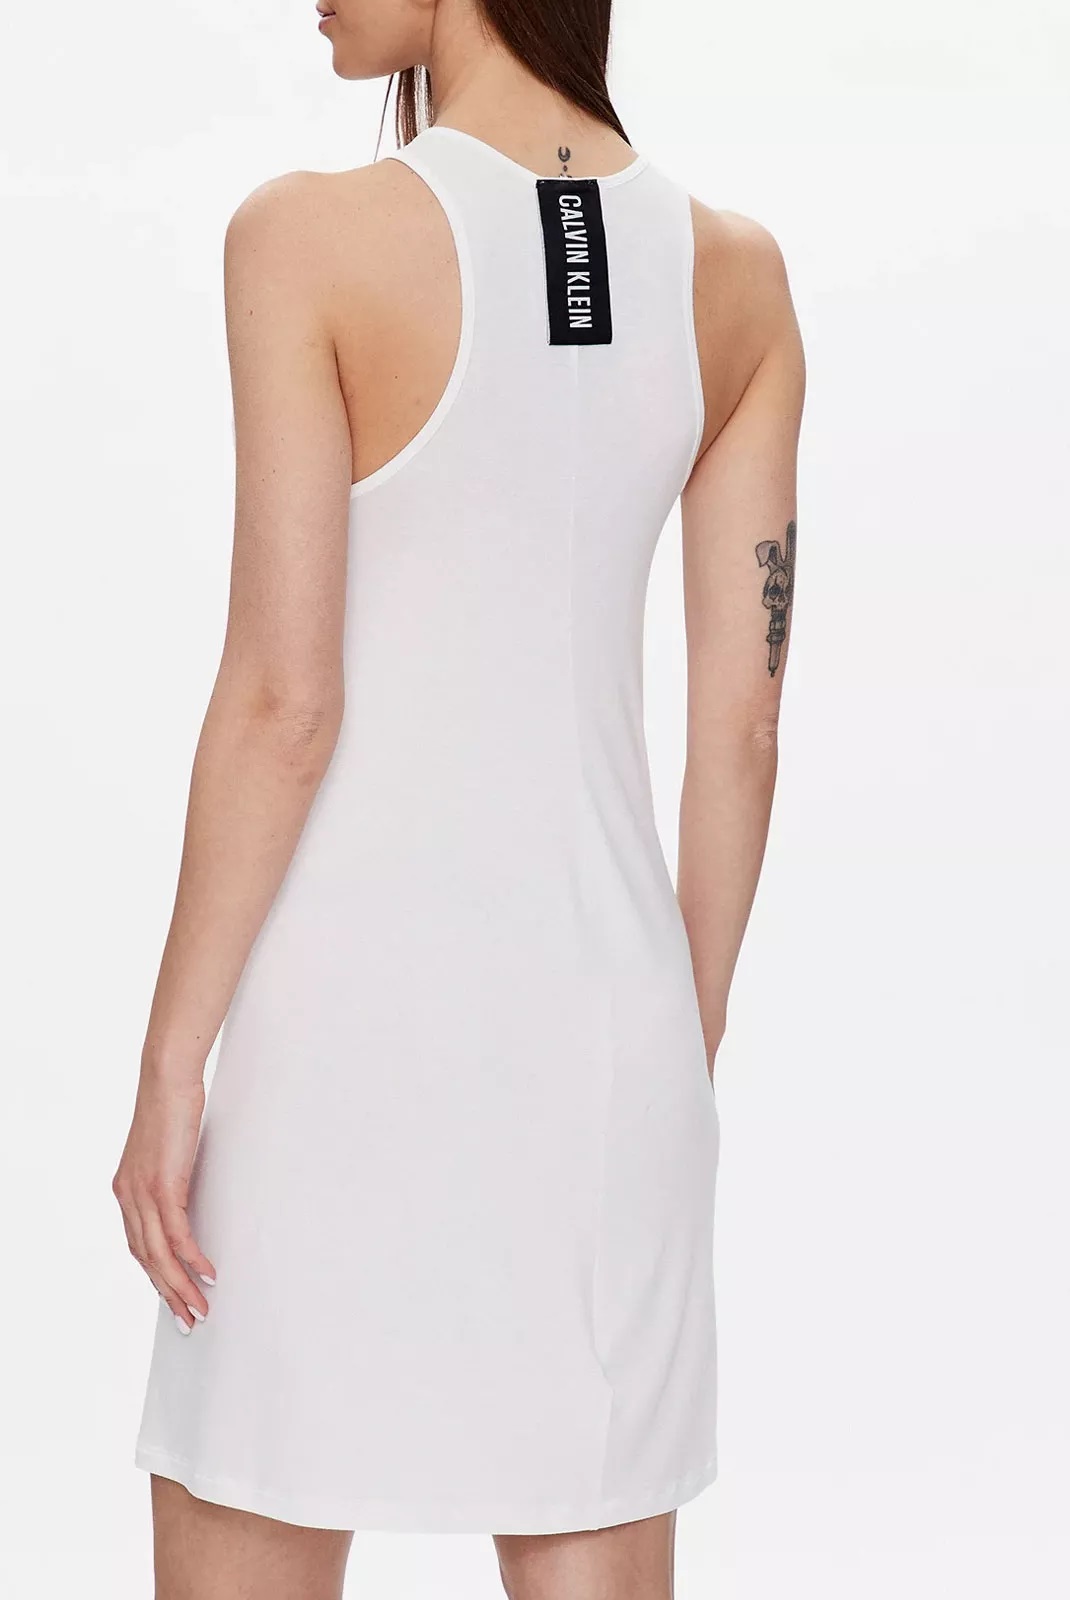 Calvin Klein dámské šaty Tank bílé s logem Velikost: S